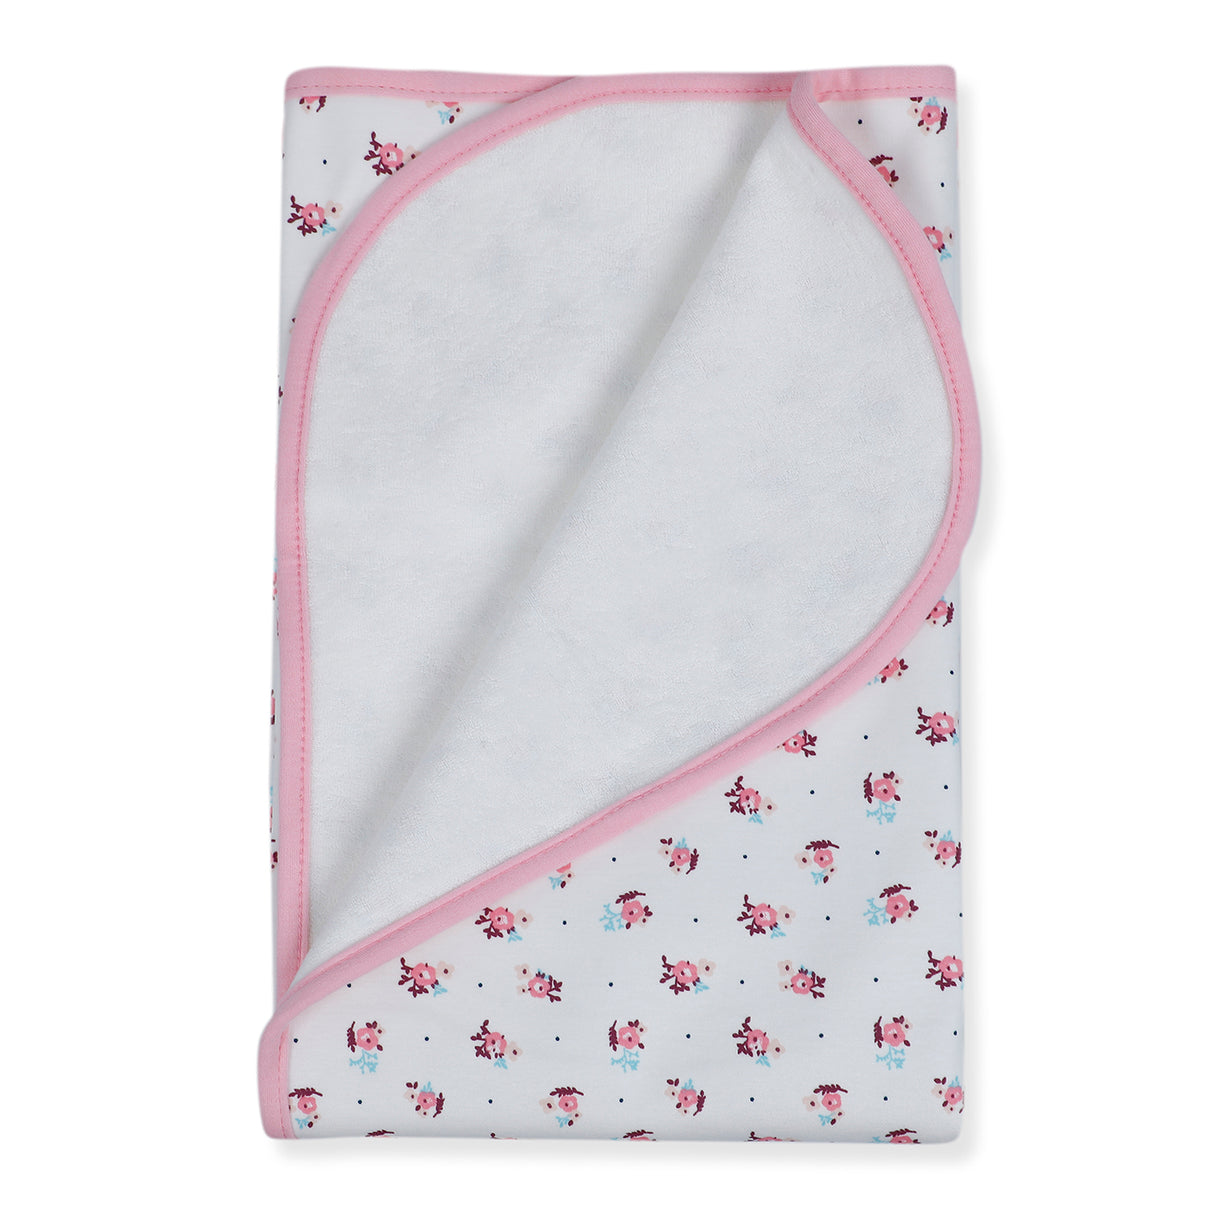 Moms Care Waterproof Bed Protector Dry Sheet